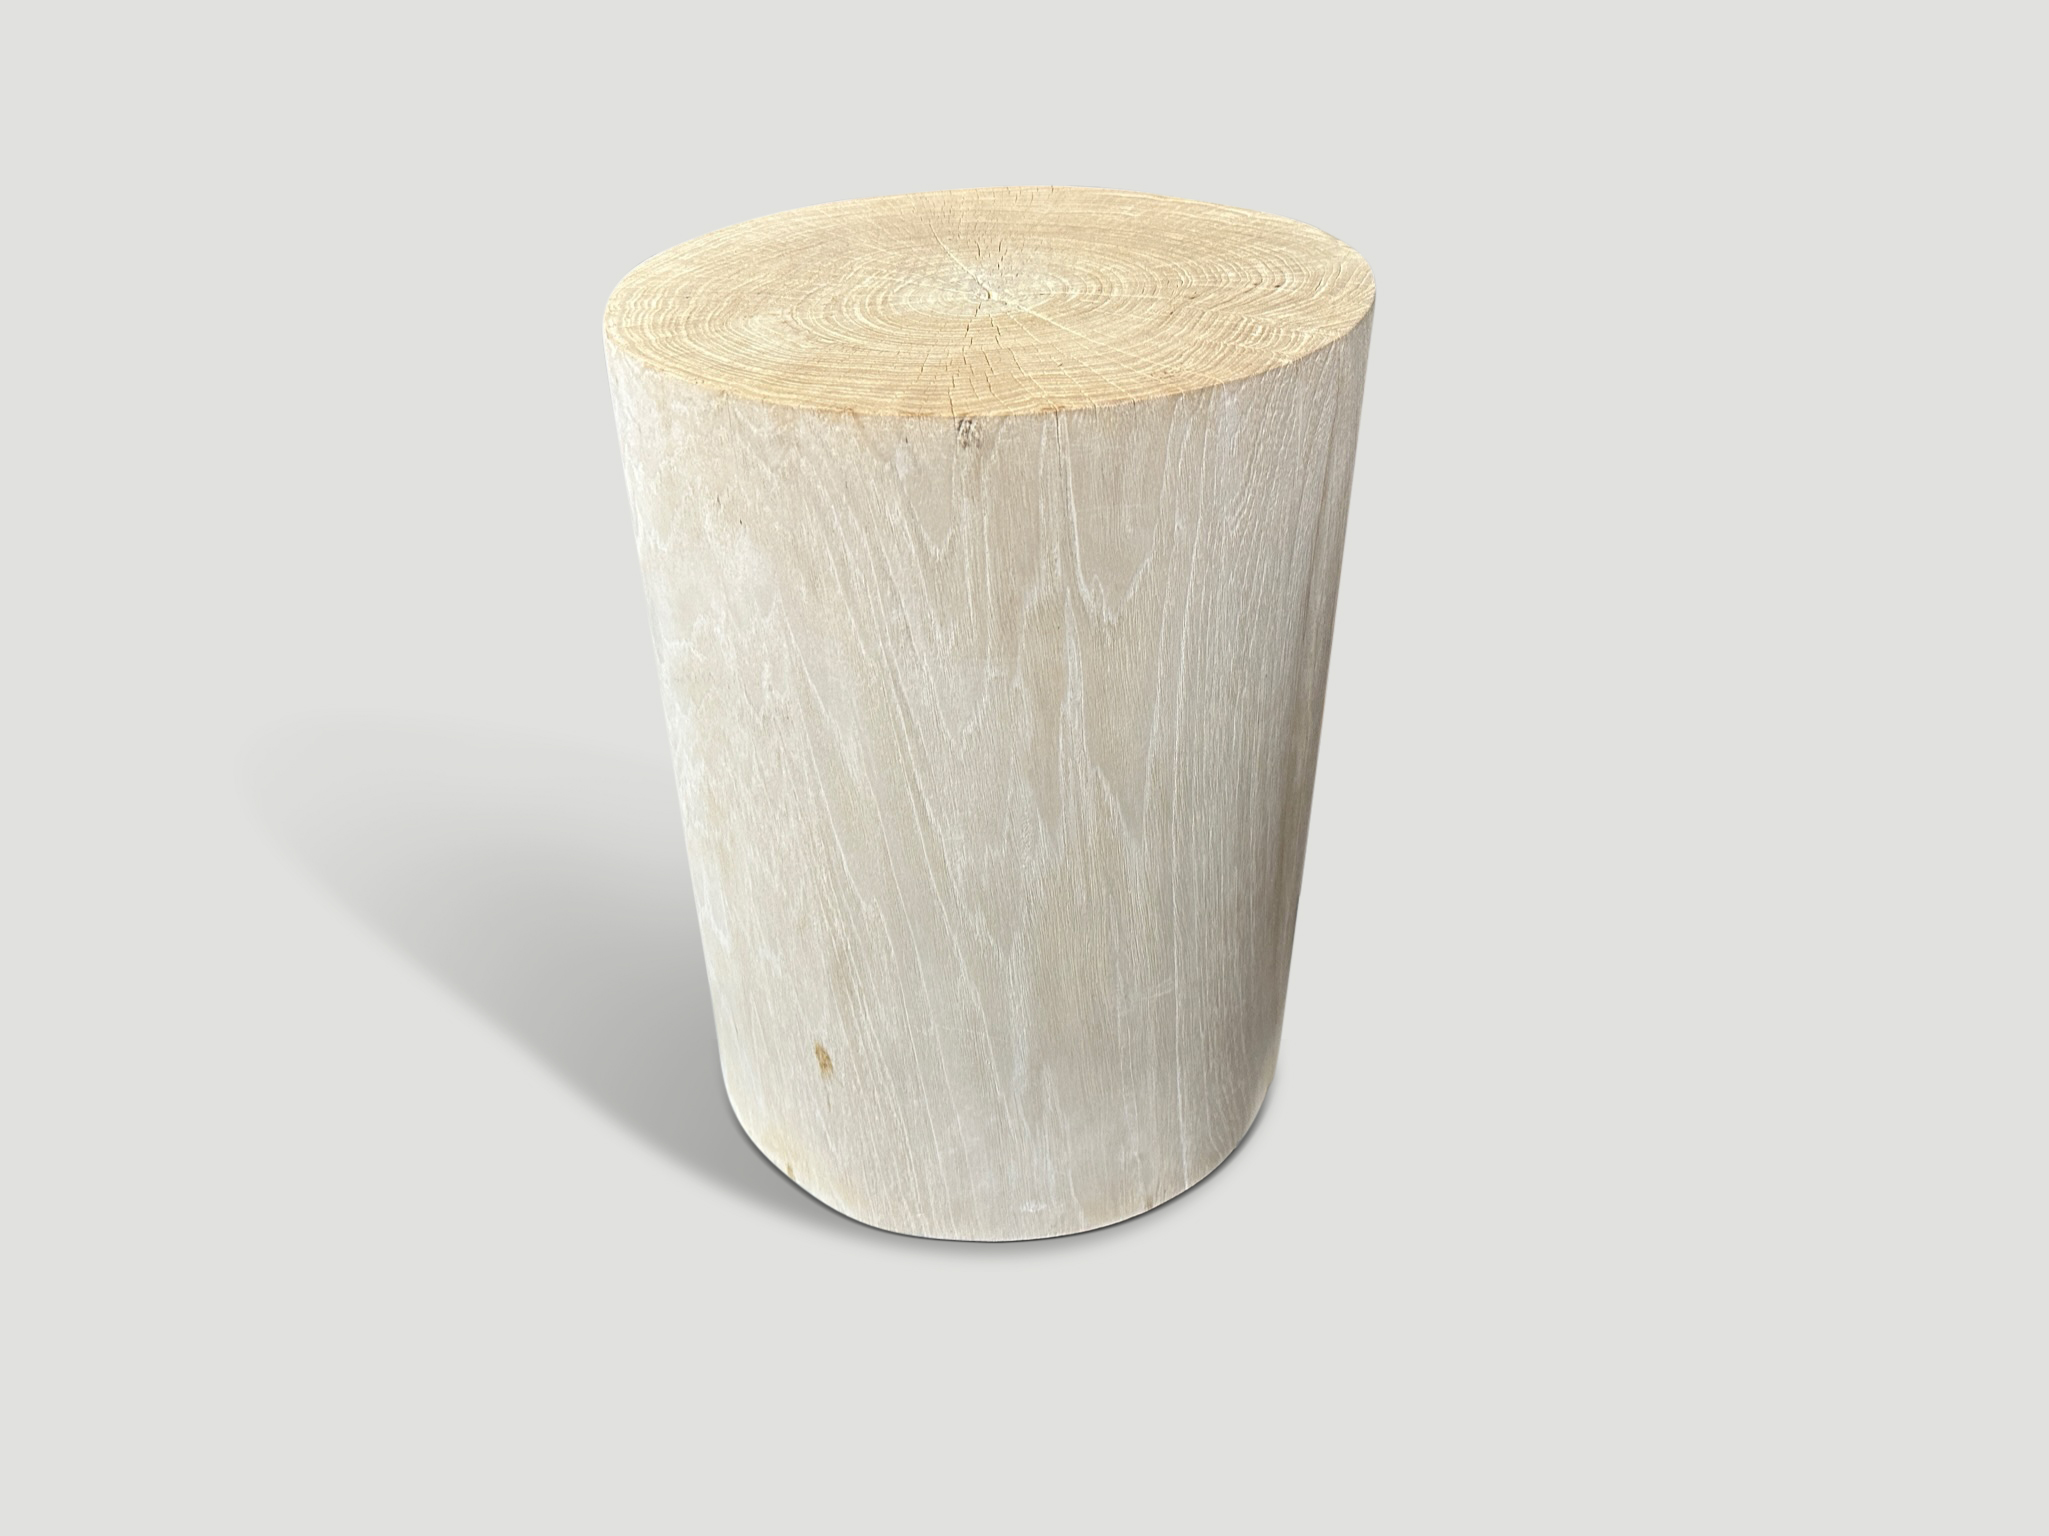 reclaimed teak wood cylinder side table or stool